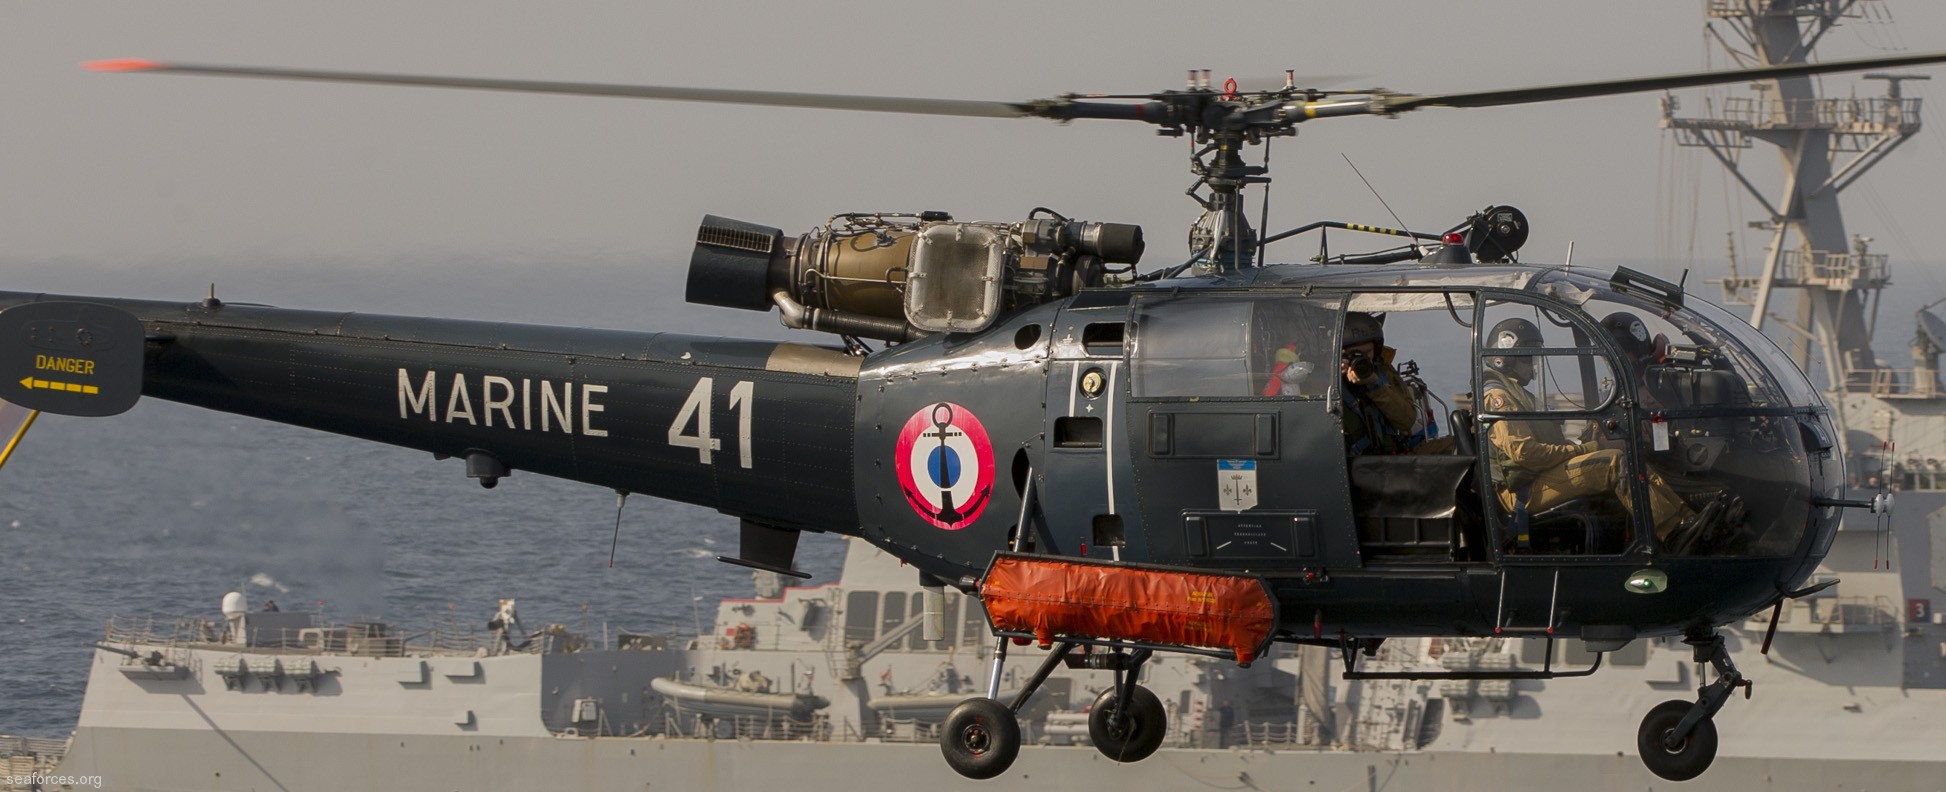 sa 316 319 alouette iii helicopter french navy marine nationale aeronavale flottille 09 41